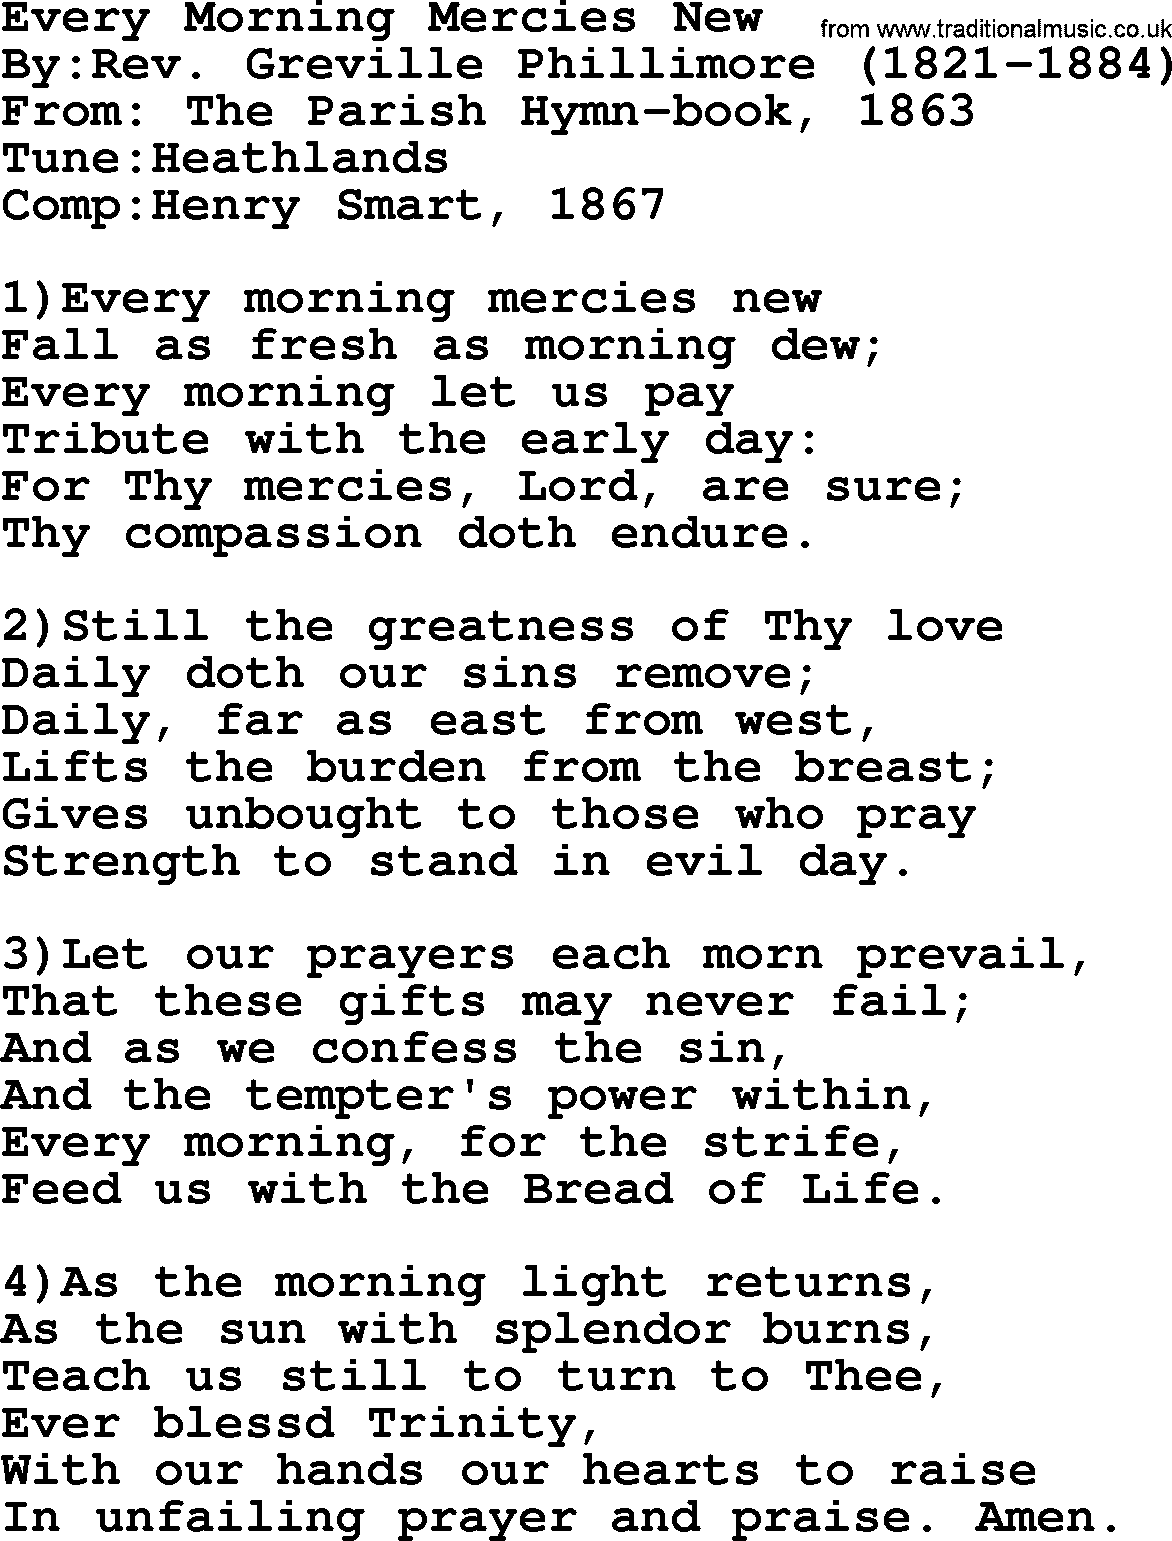 Methodist Hymn: Every Morning Mercies New, lyrics